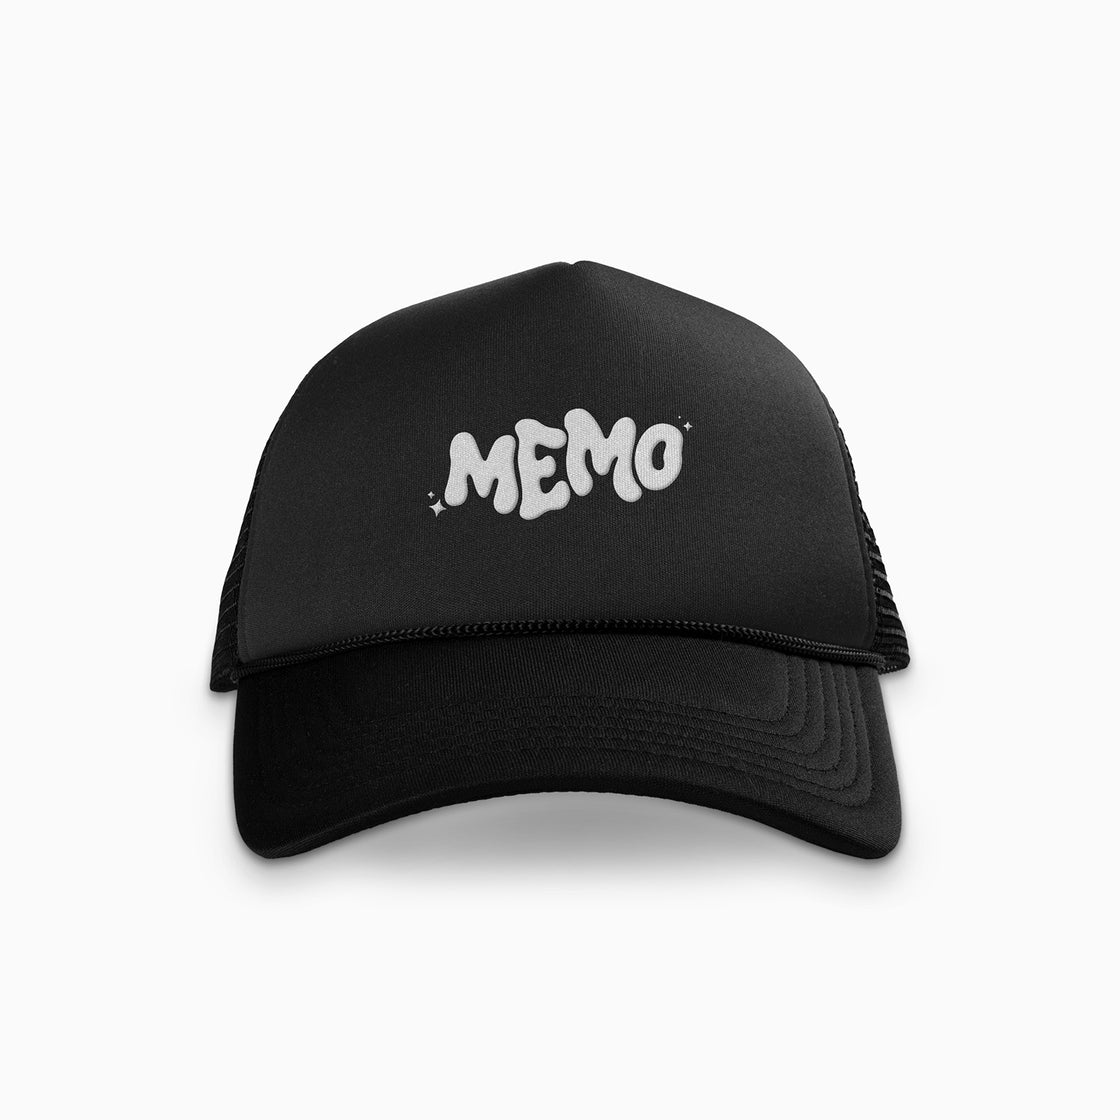 MEMO Album Trucker Hat - Black